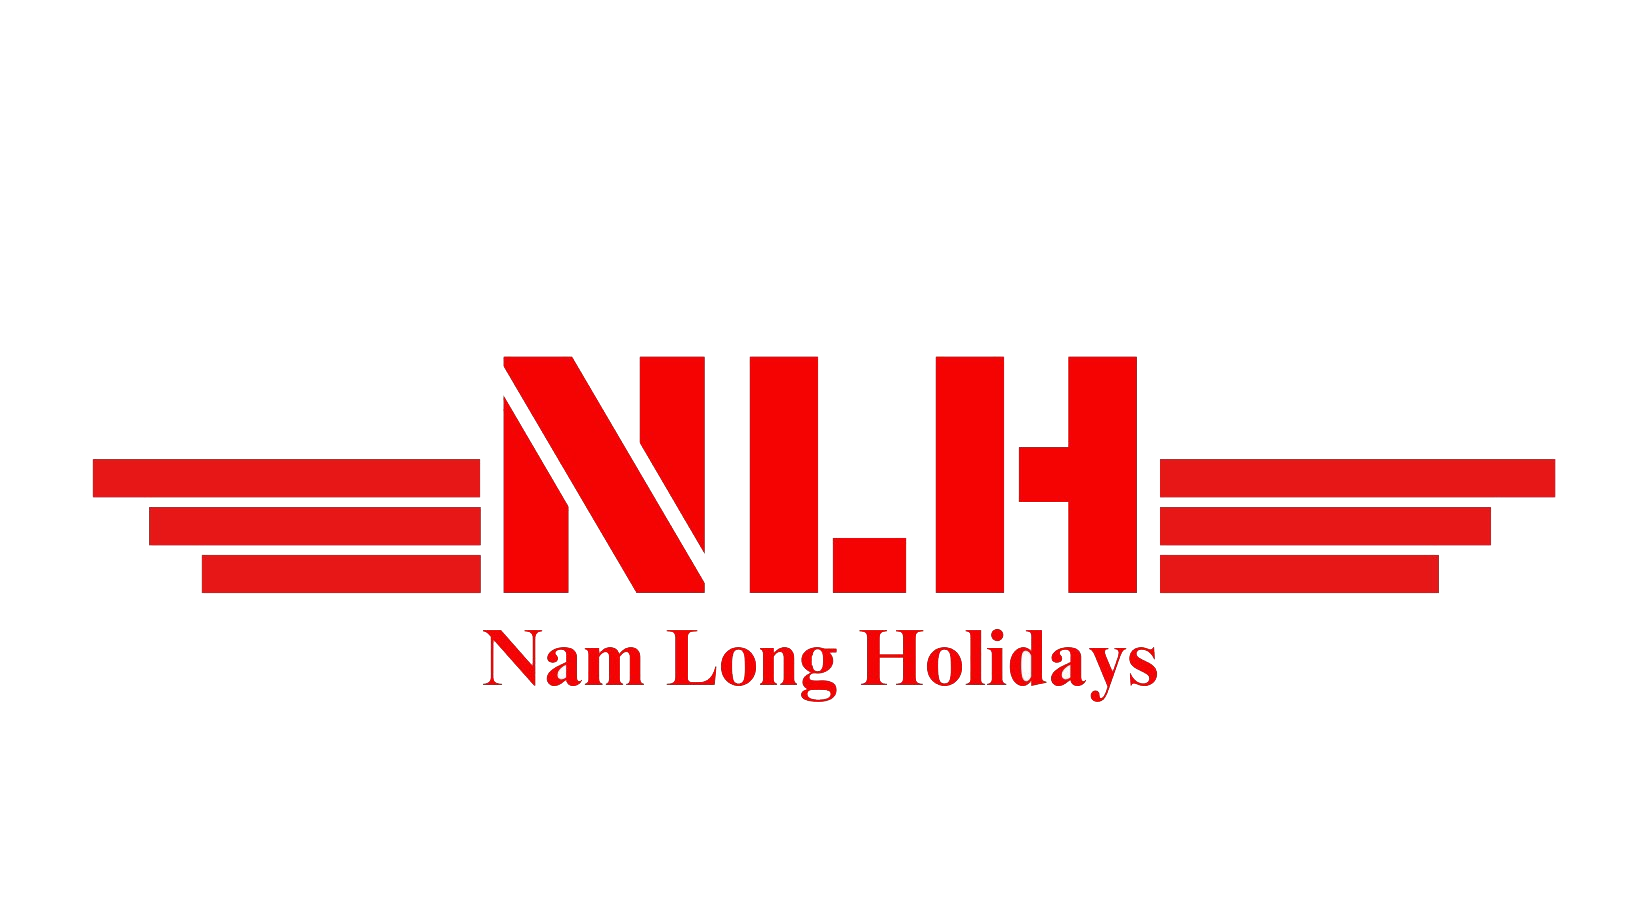 NAM LONG HOLIDAYS